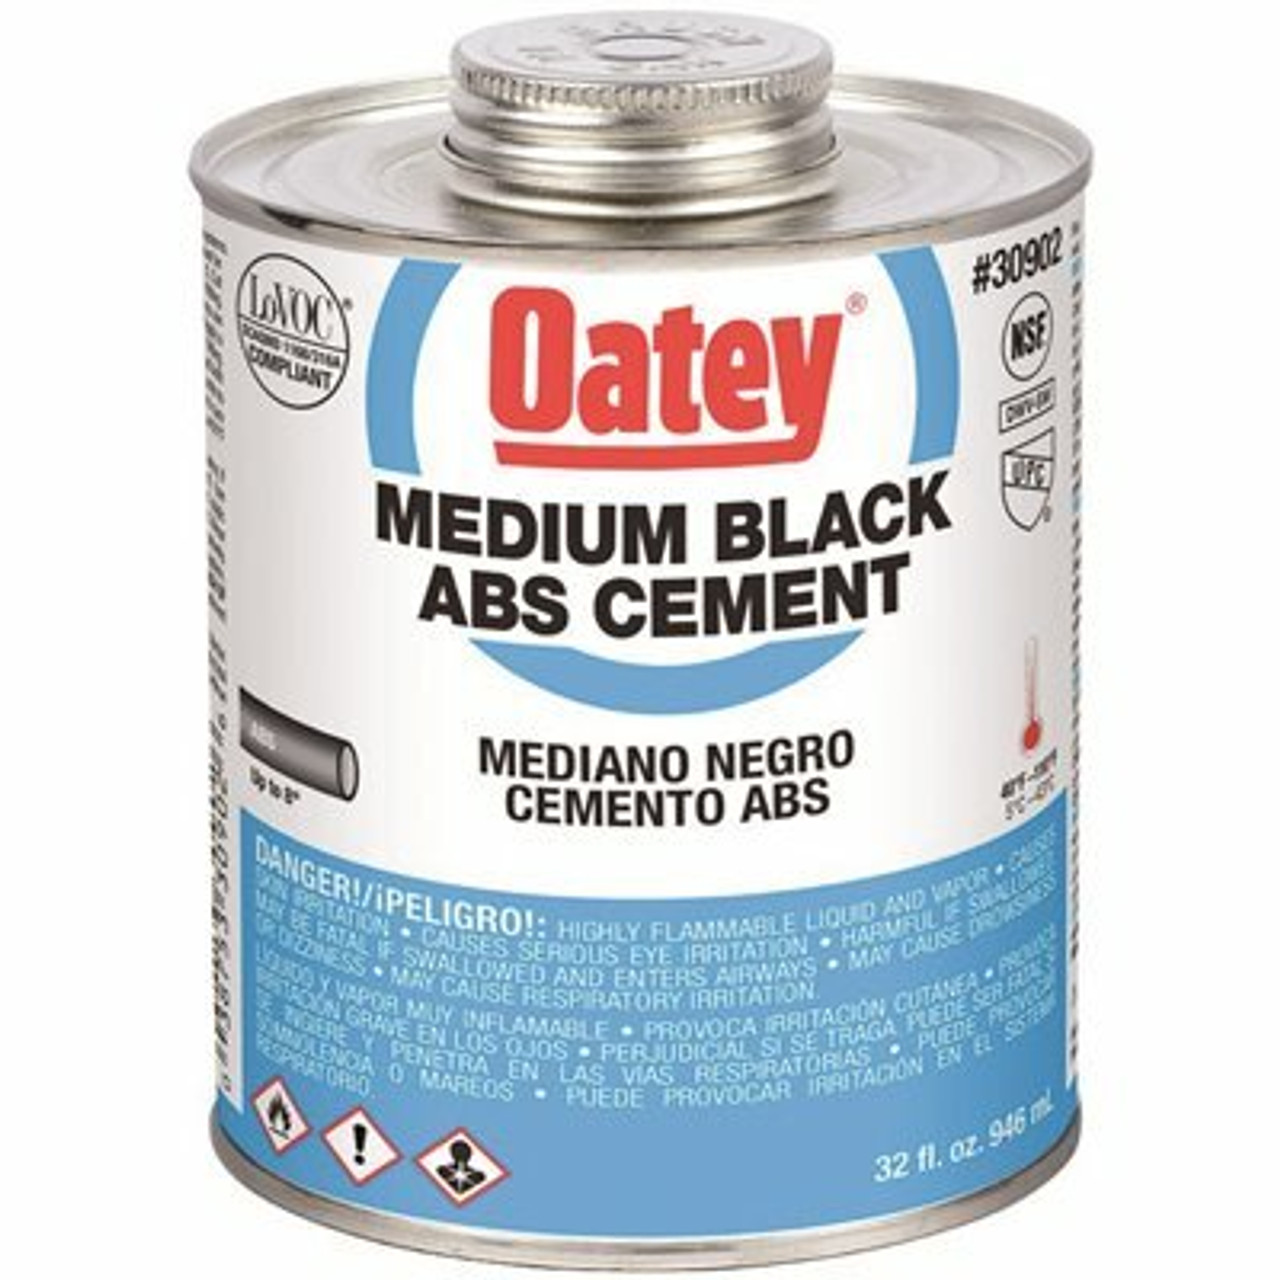 Oatey 32 Oz. Medium Black Abs Cement